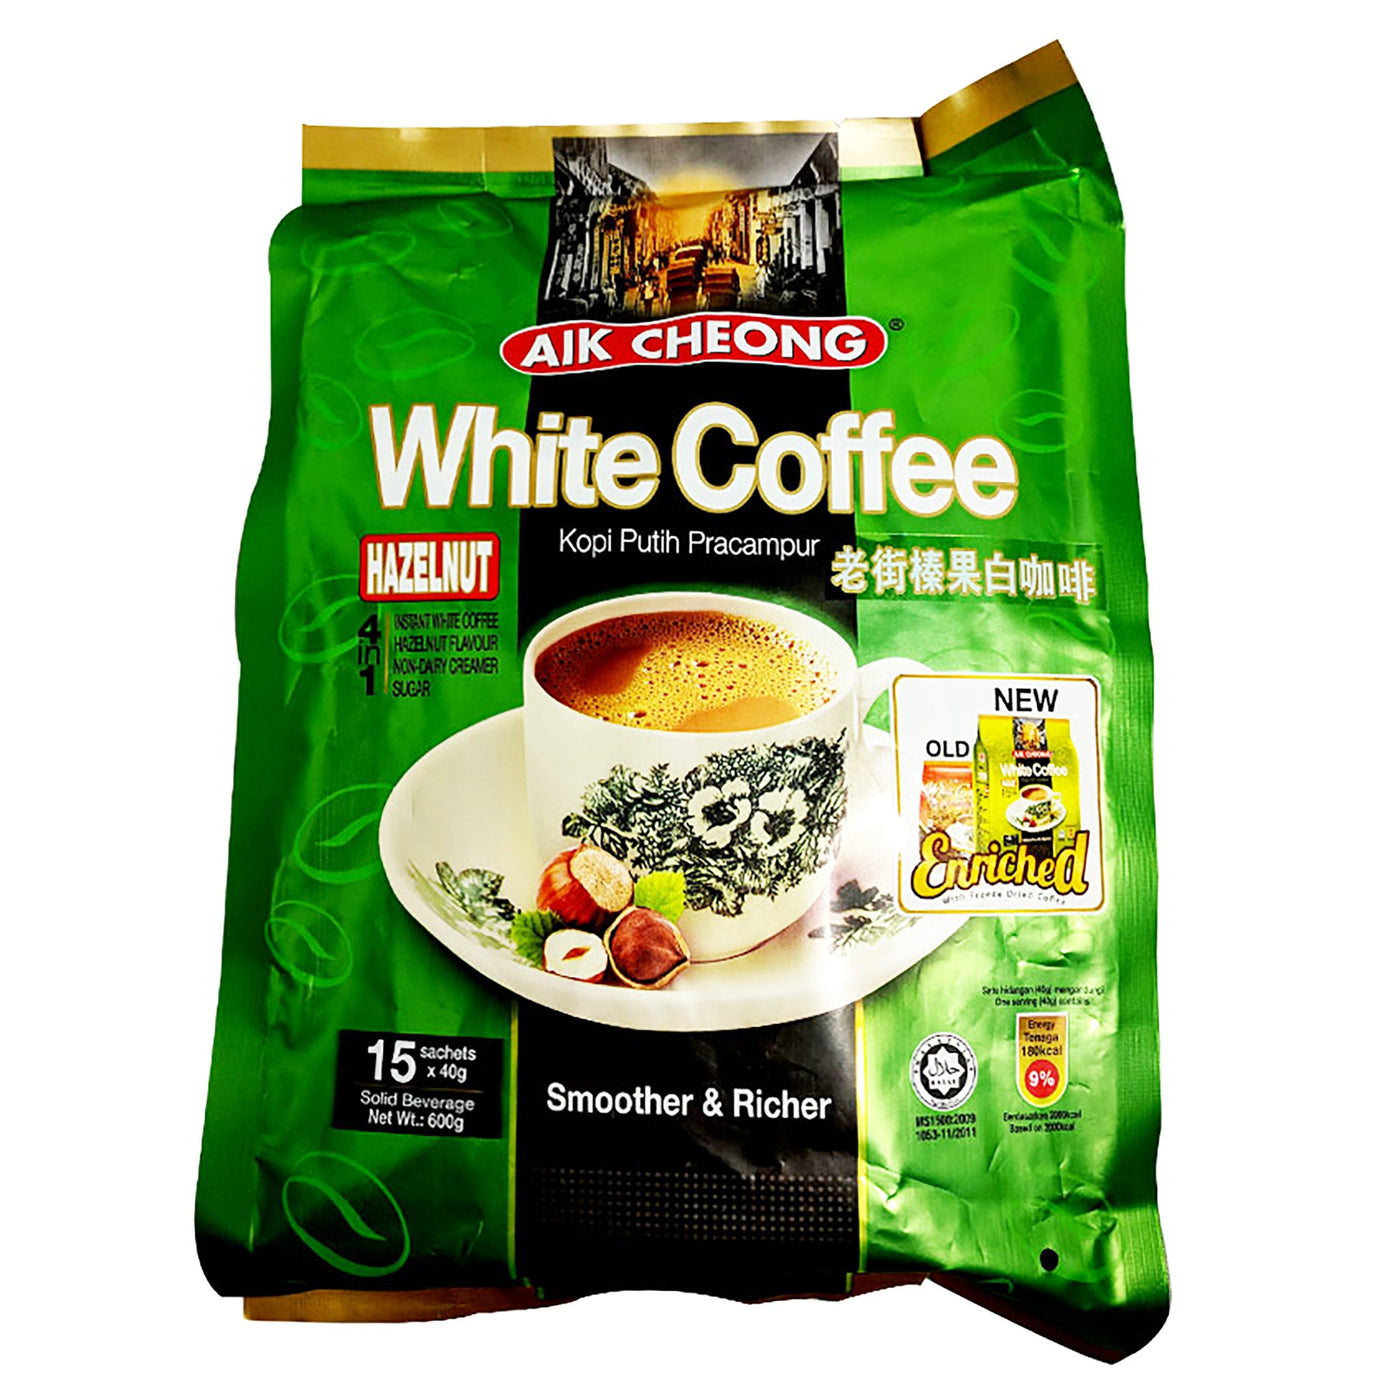 Aik Cheong White Coffee Hazelnut Flavor 21.16oz Just